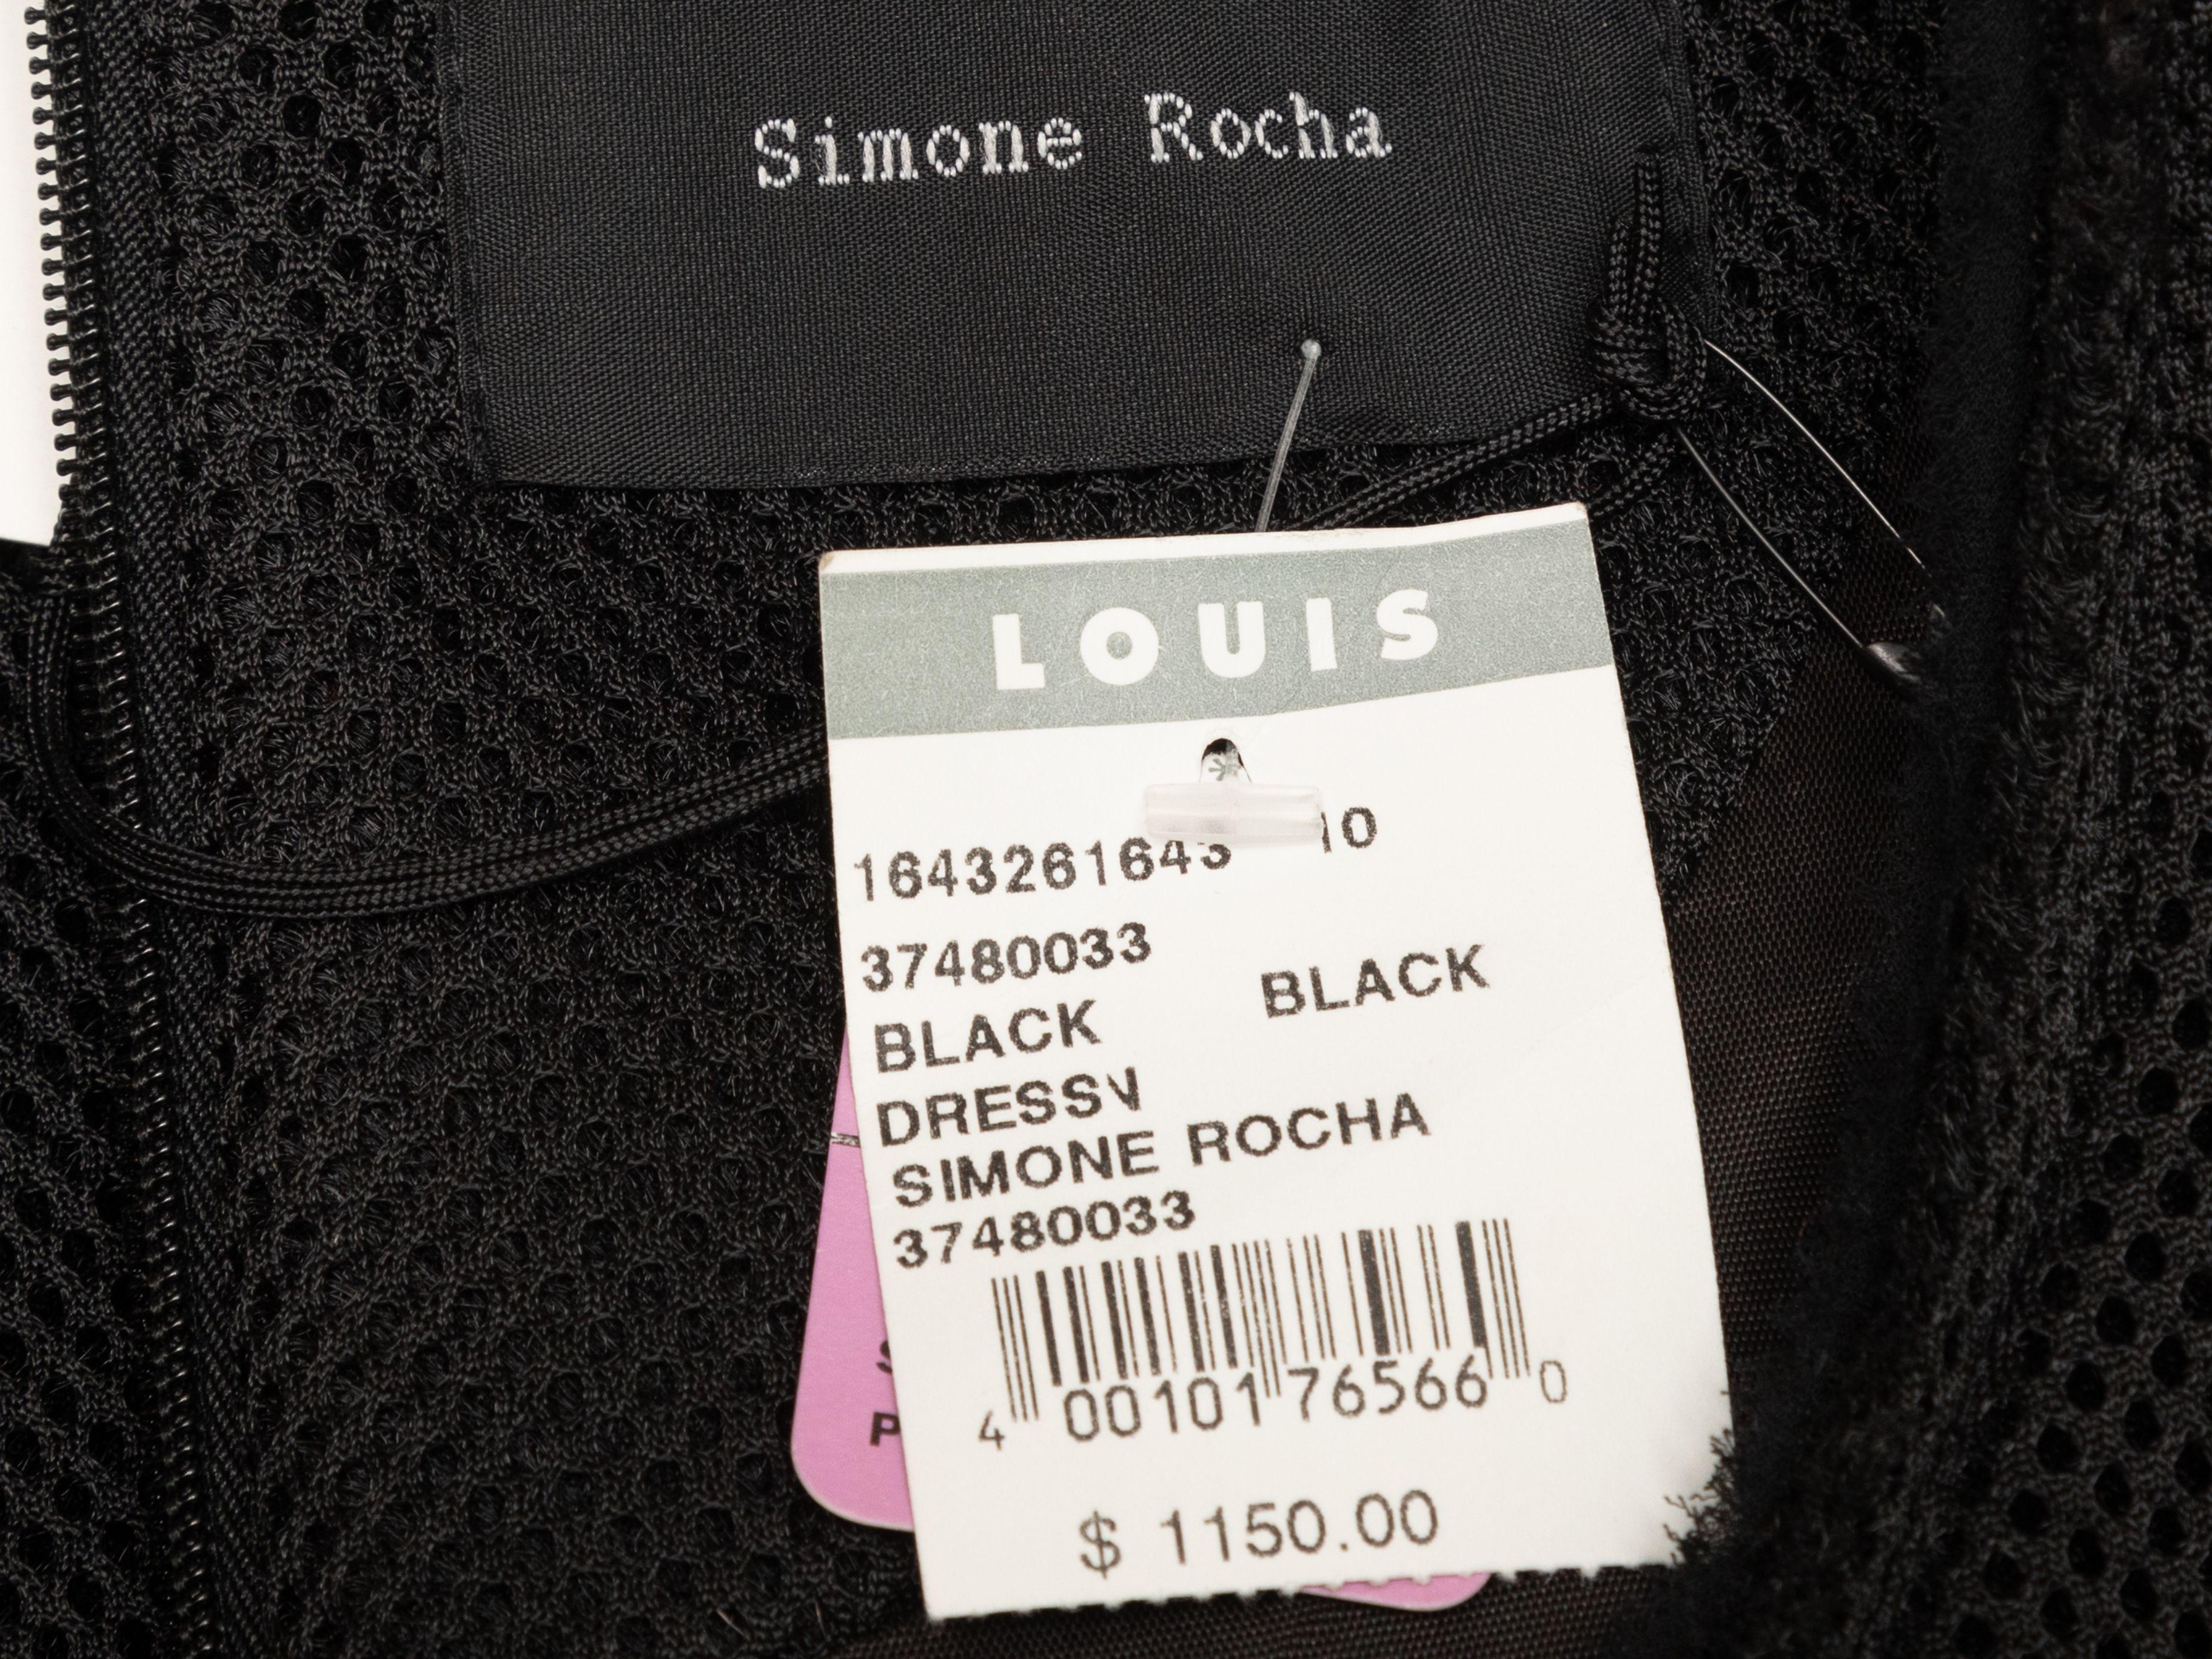 Product Details: Black sleeveless neoprene dress by Simone Rocha. Crew neck. Zip closure at center back. 34